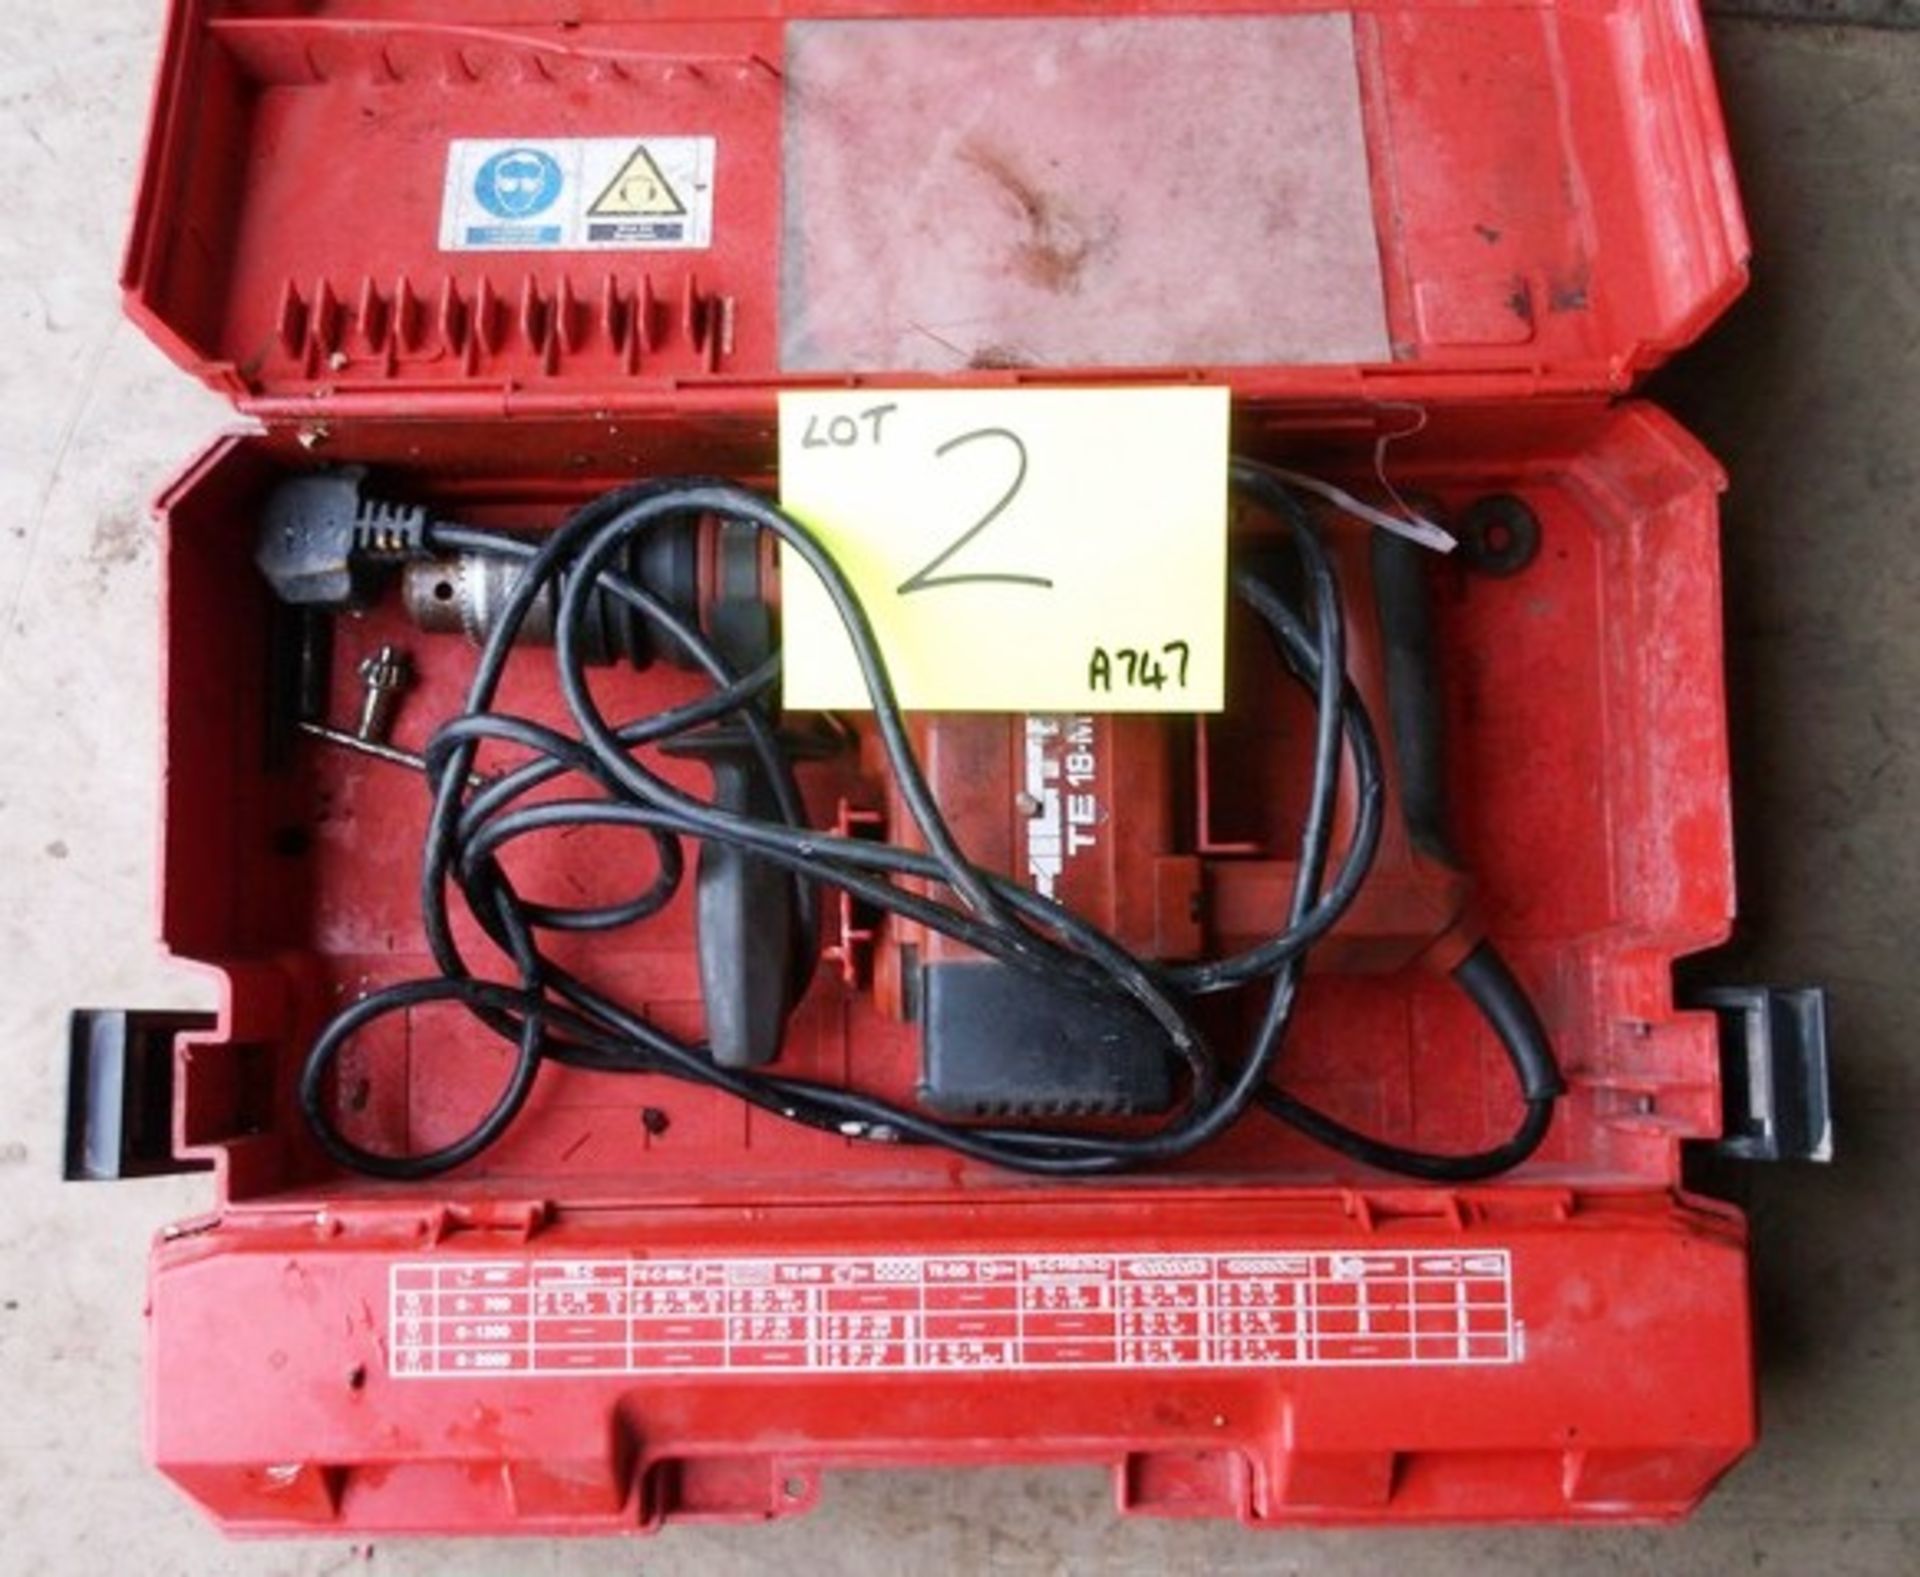 HILTI TE-18-M INDUSTRIAL DRILL (RED BOX)